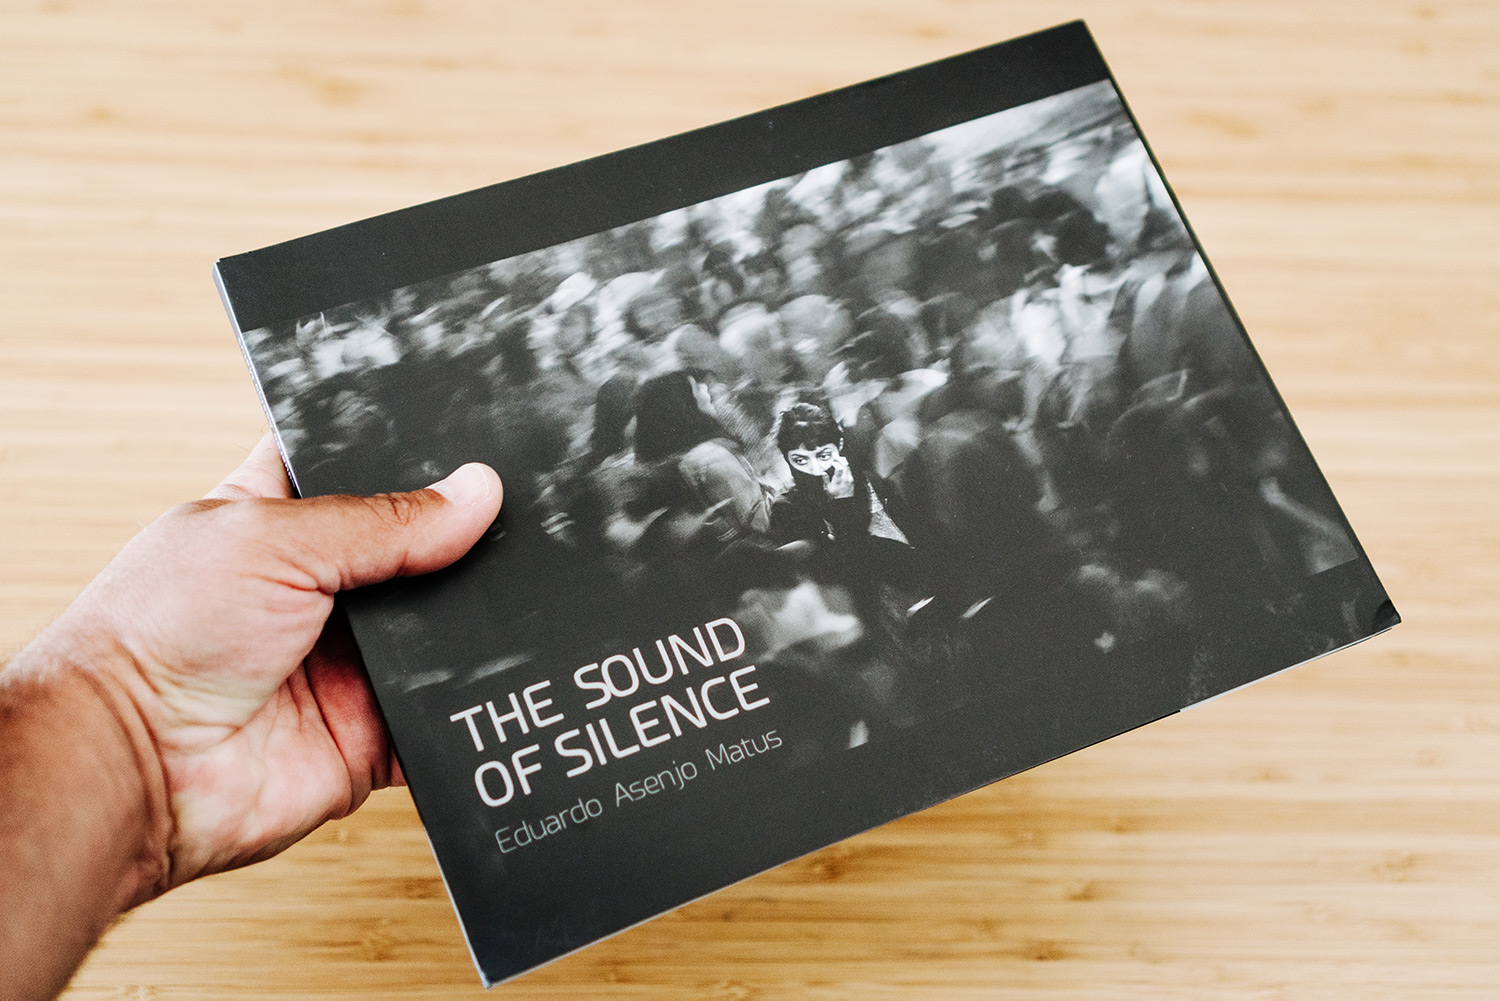 The Sound Of Silence – Photography Book, by Eduardo Asenjo Matus